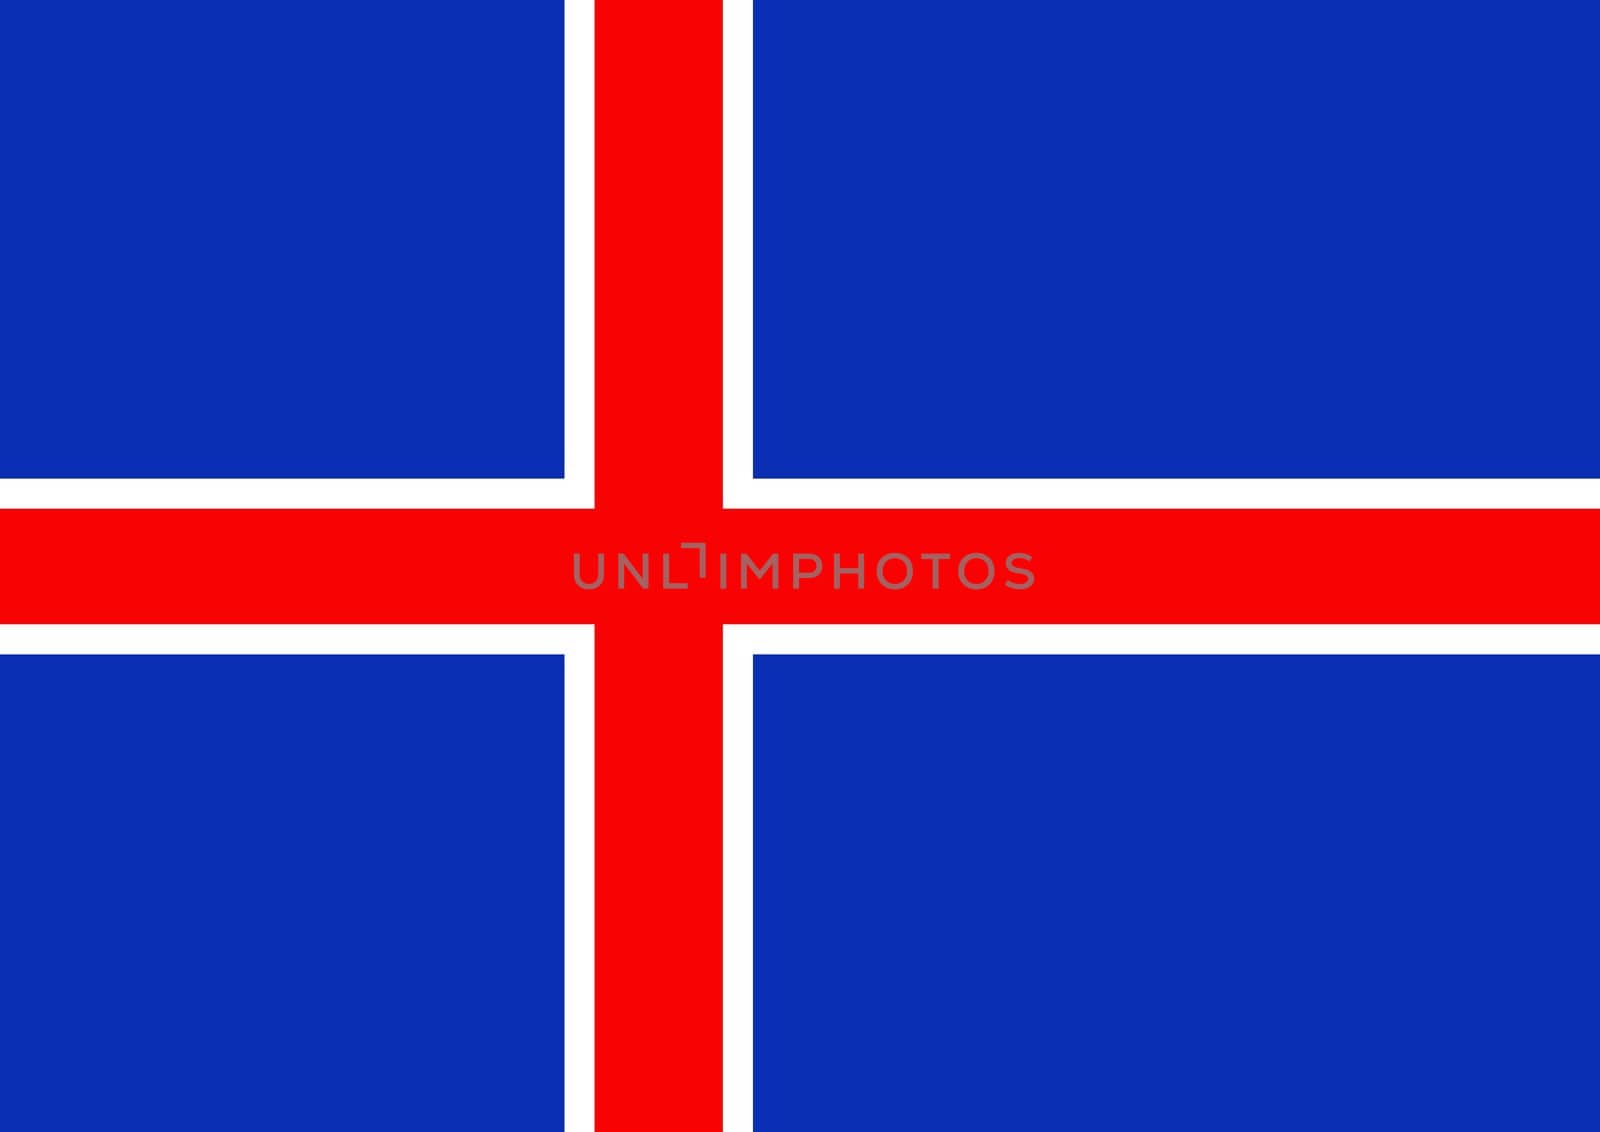 Illustrated flag of Iceland